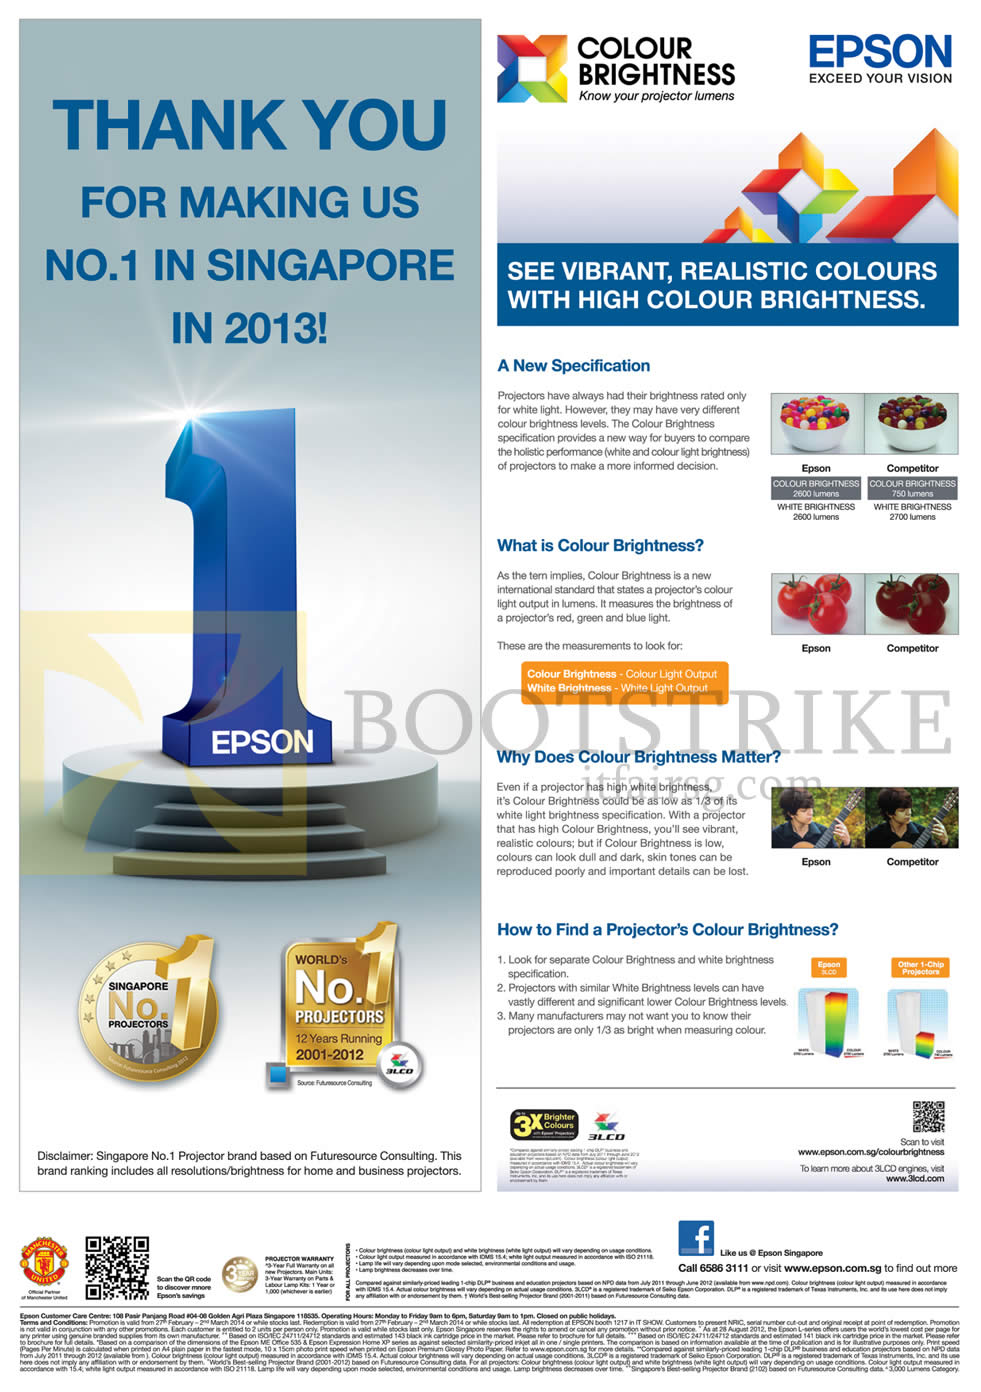 IT SHOW 2014 price list image brochure of Epson Printer Colour Brightness Feature